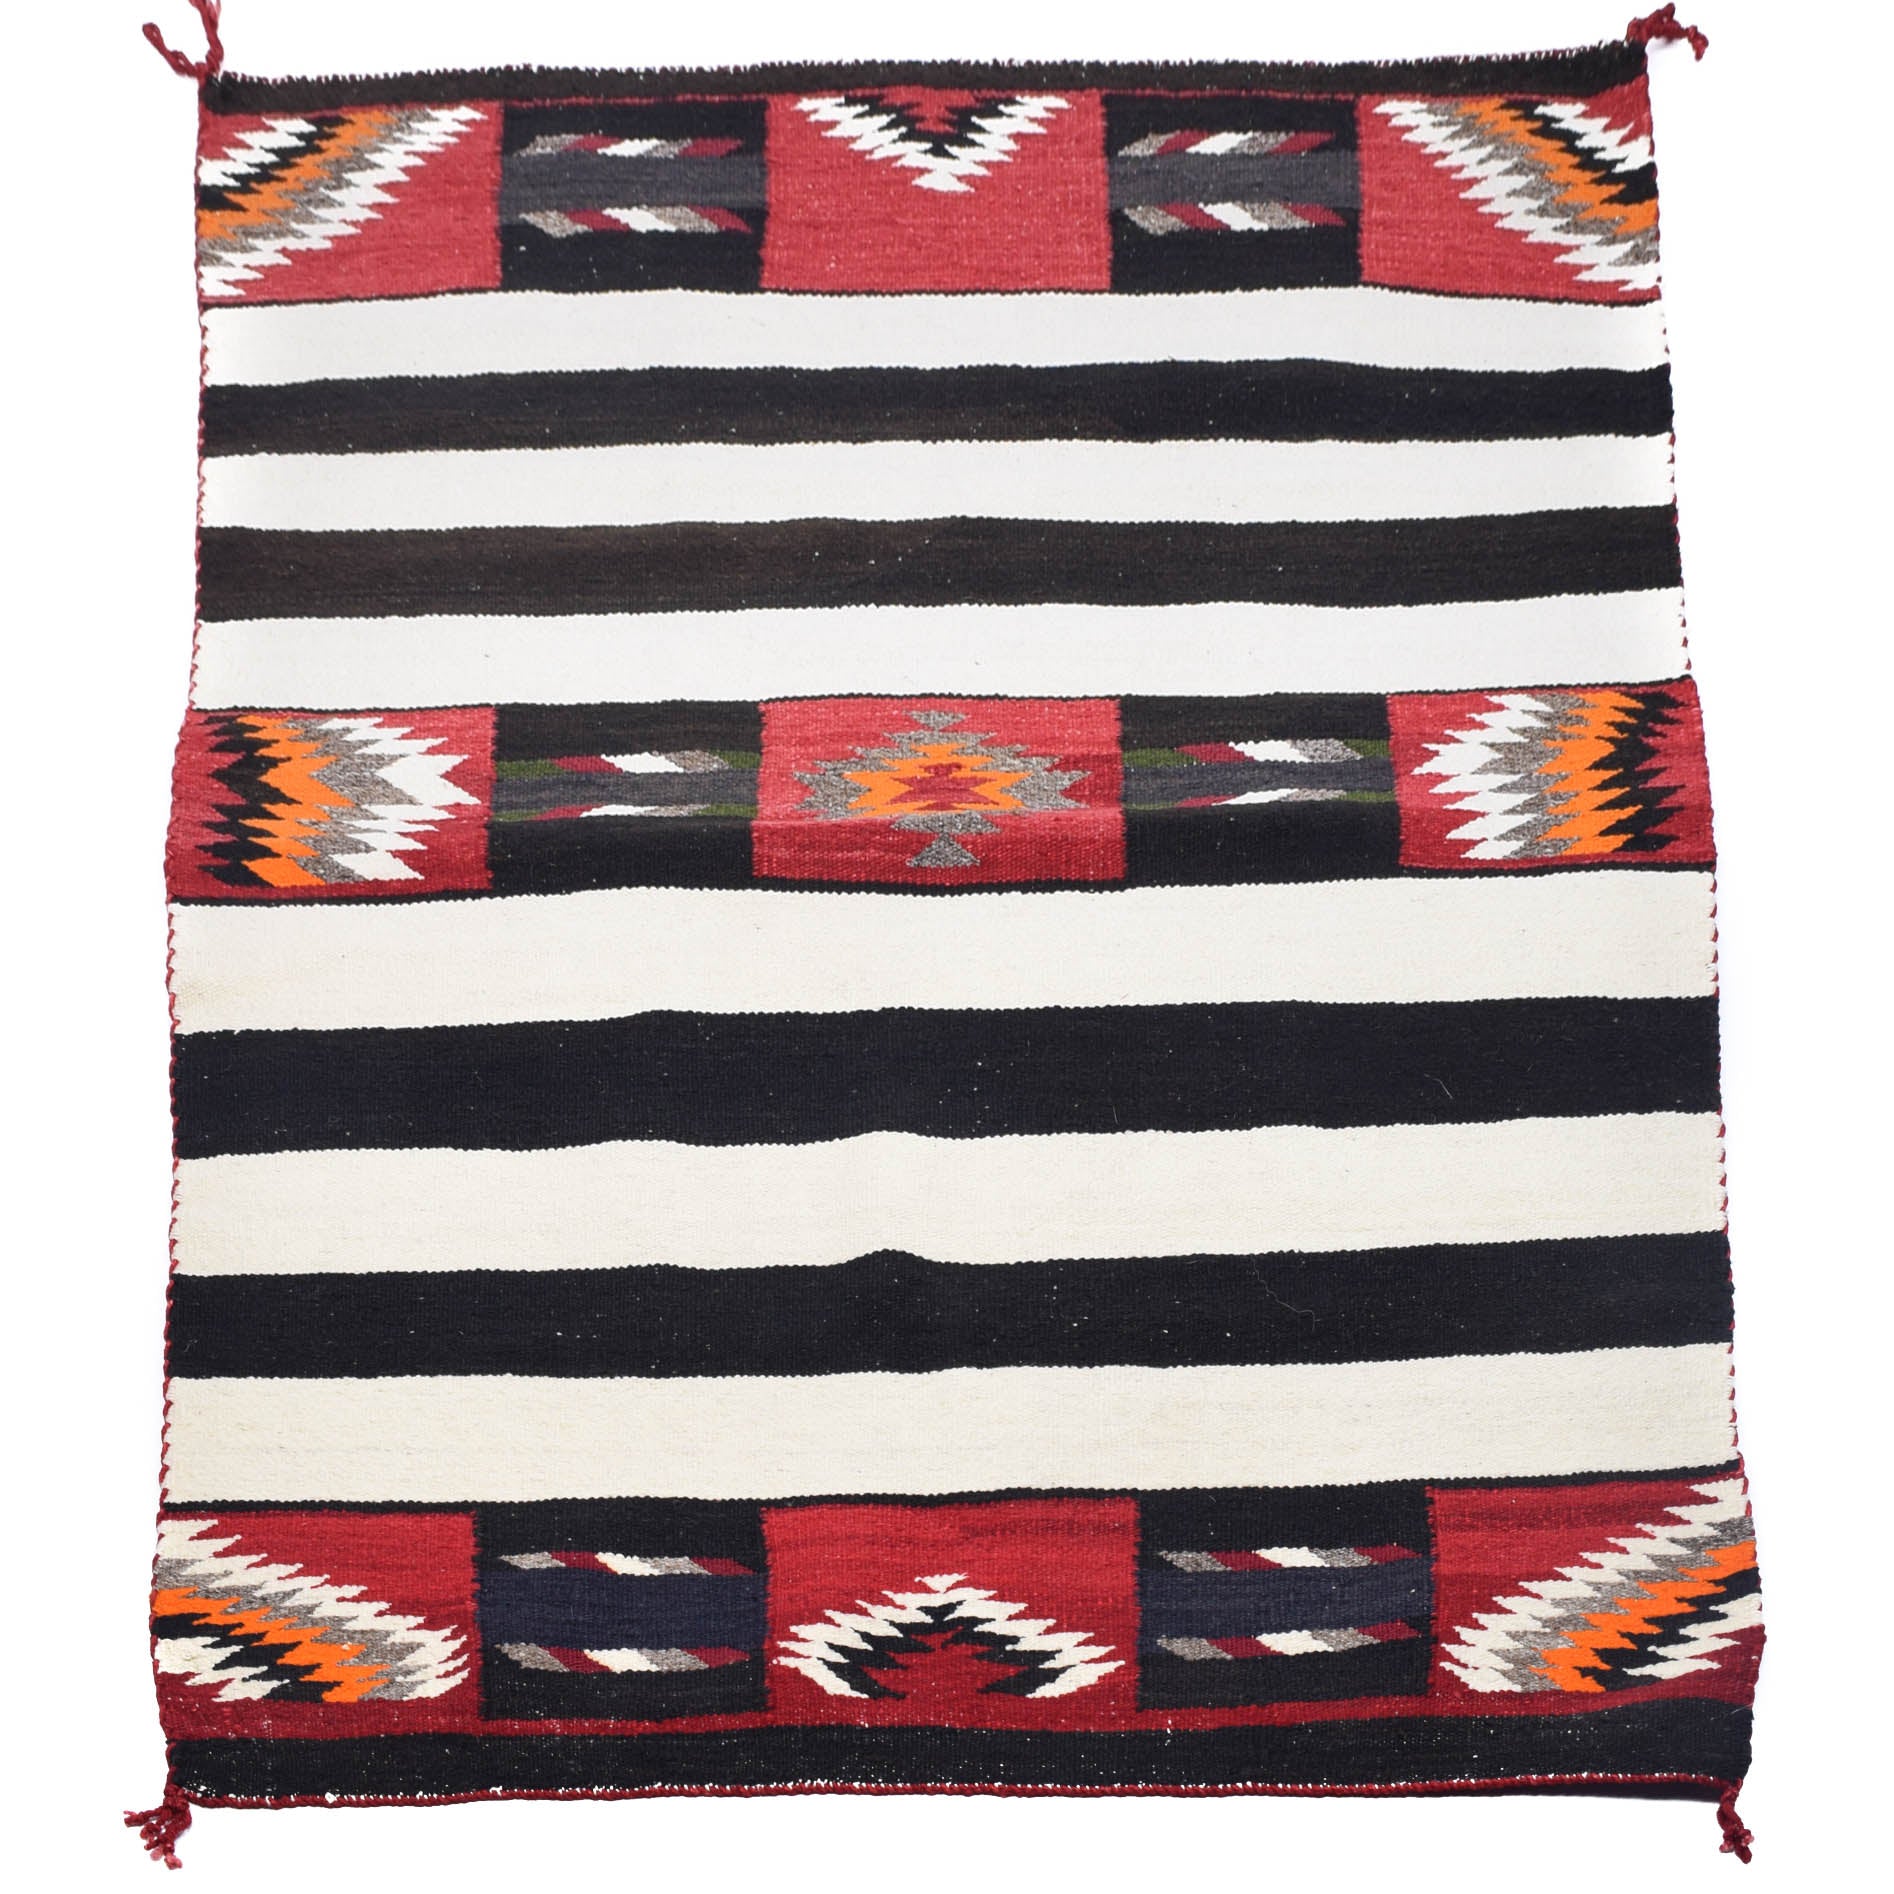 Teec Nos Pos Stylized Chief Blanket, Native, Weaving, Blanket